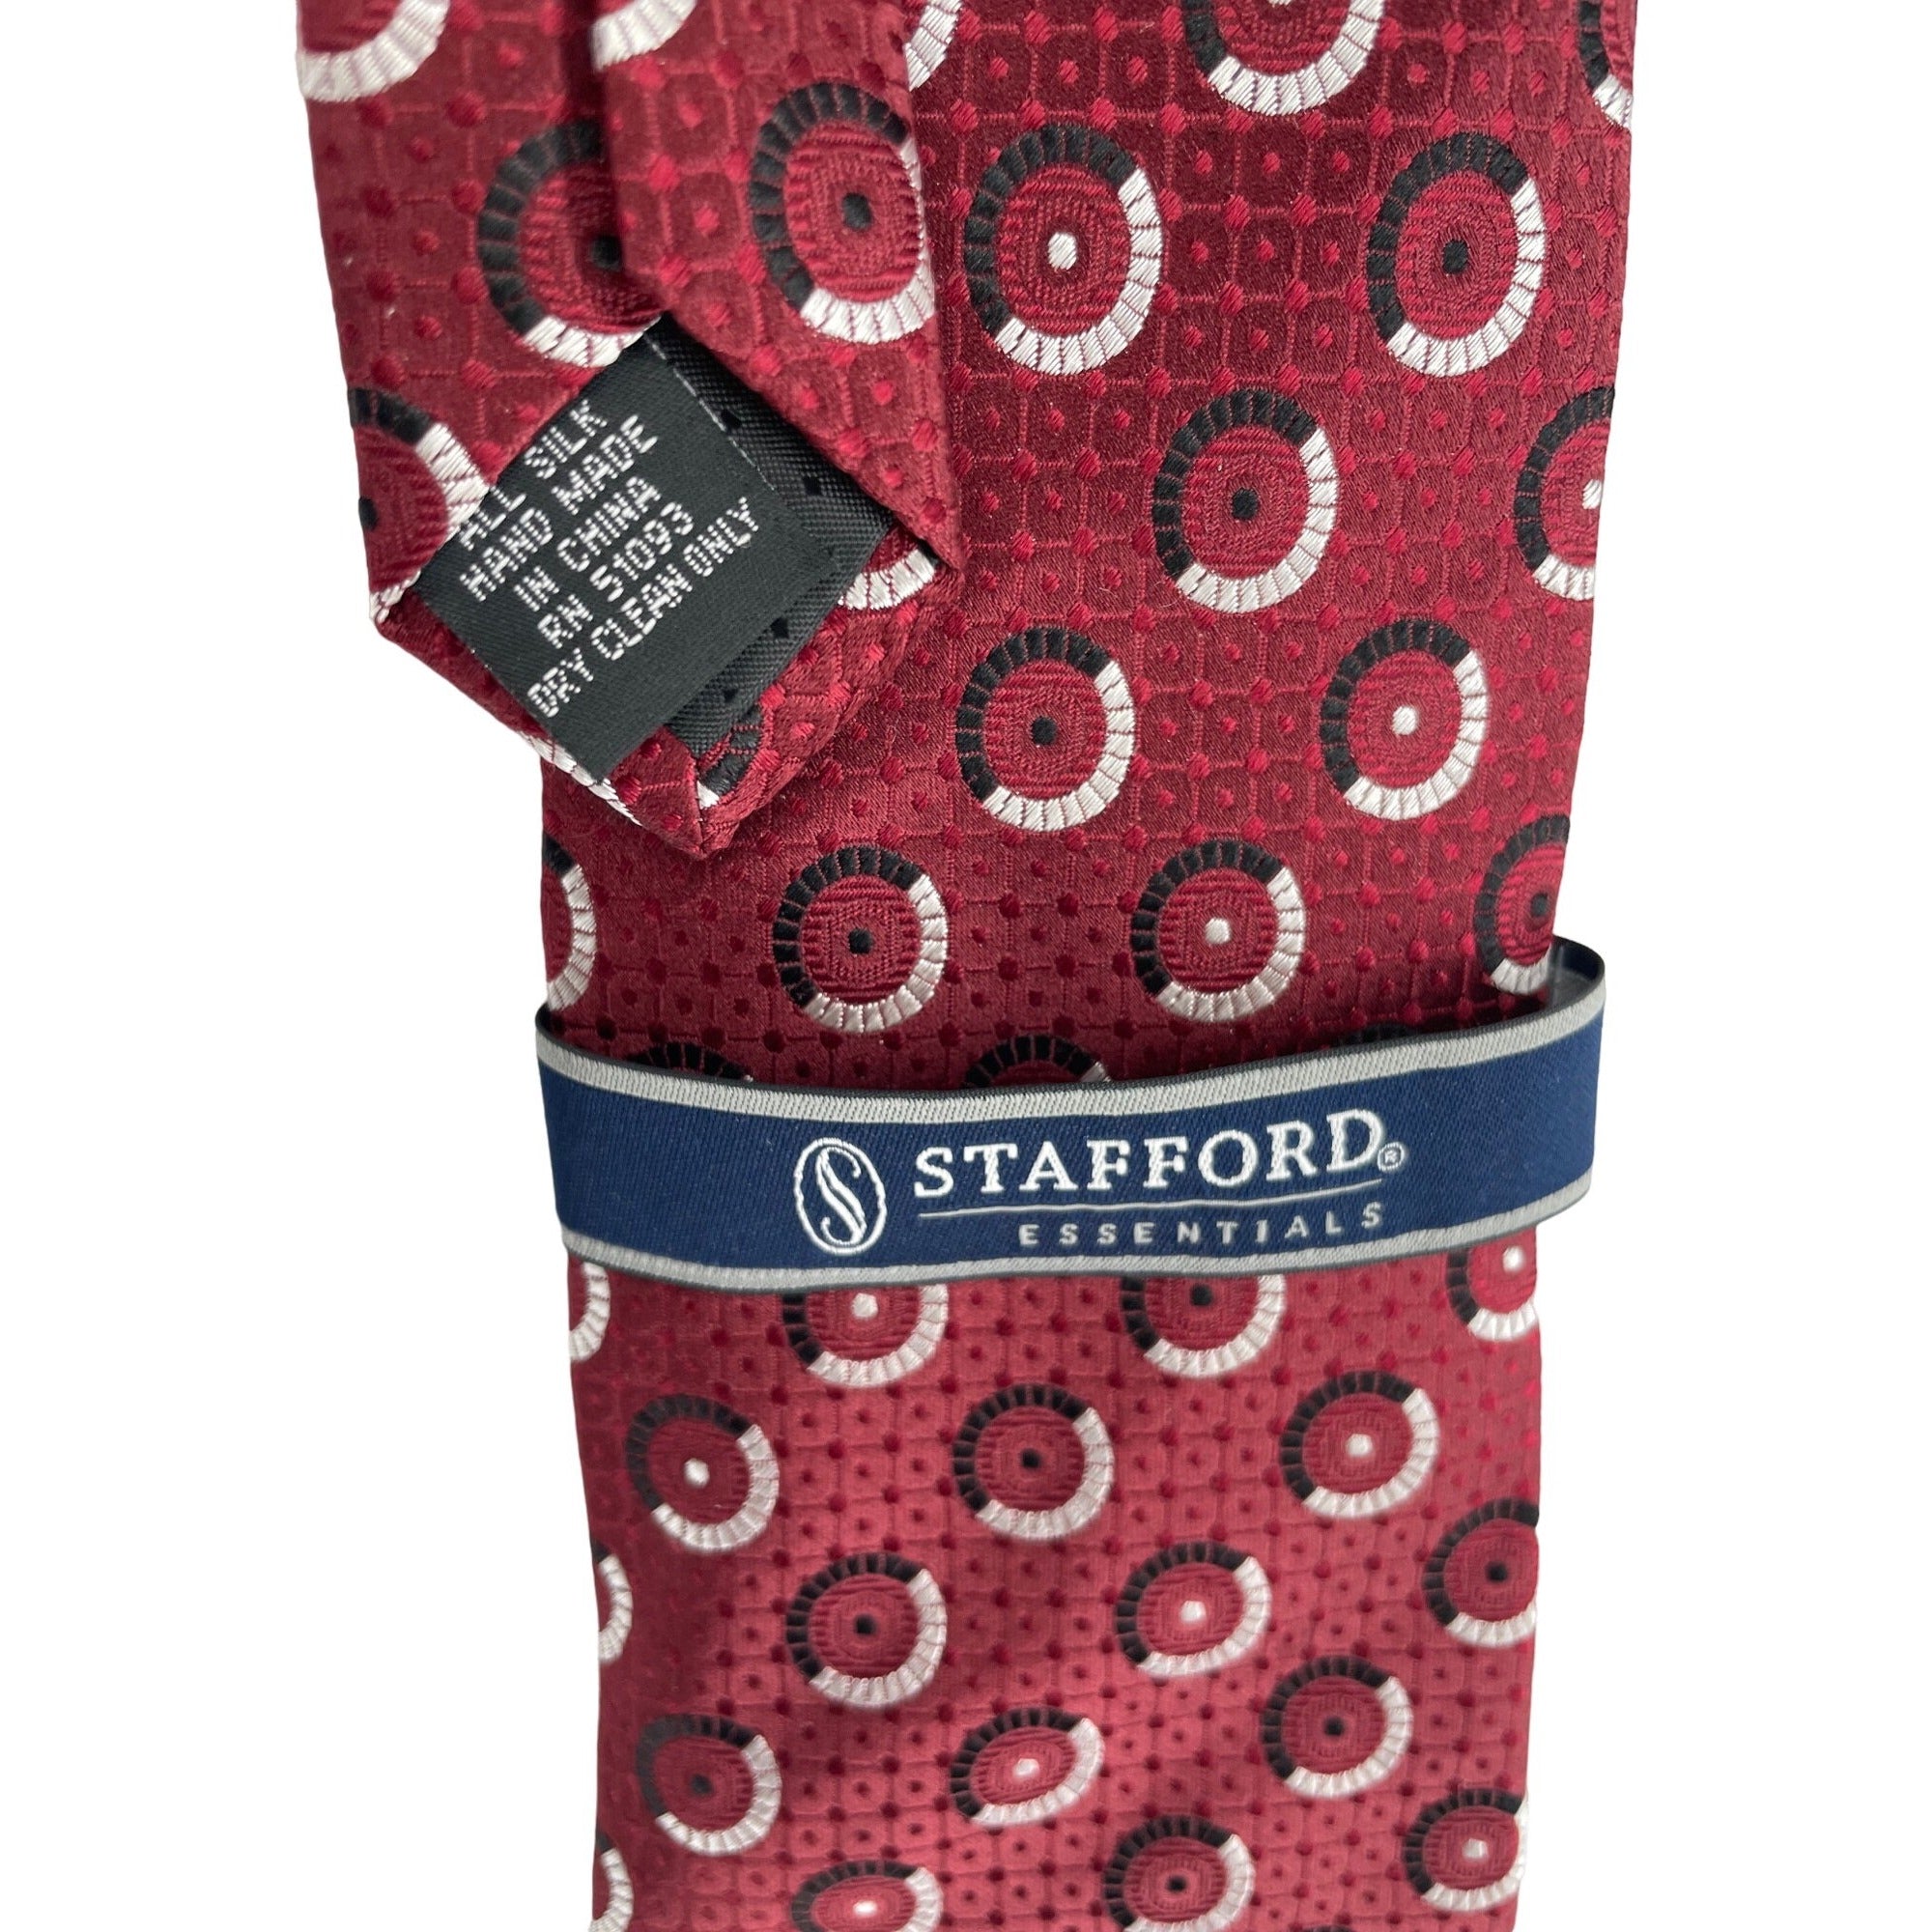 NWT Stafford Men's Wine-Colored Silk Dress Tie